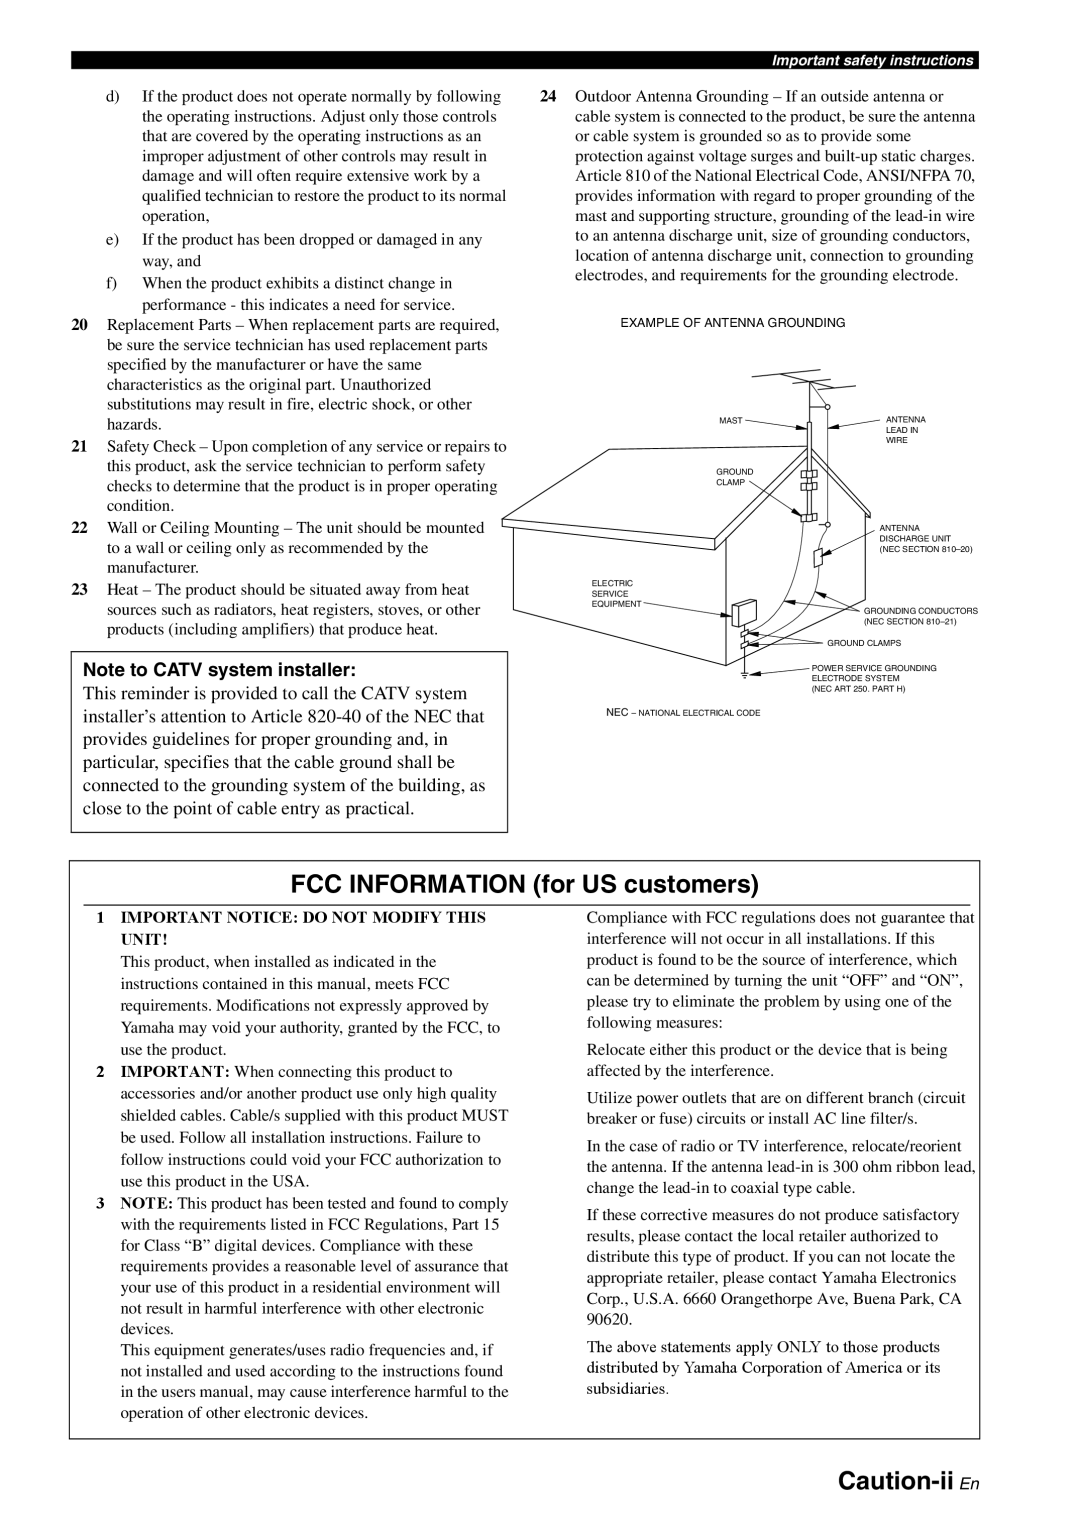 Yamaha RX-V3800 owner manual FCC INFORMATION for US customers, Caution-ii En, Note to CATV system installer 